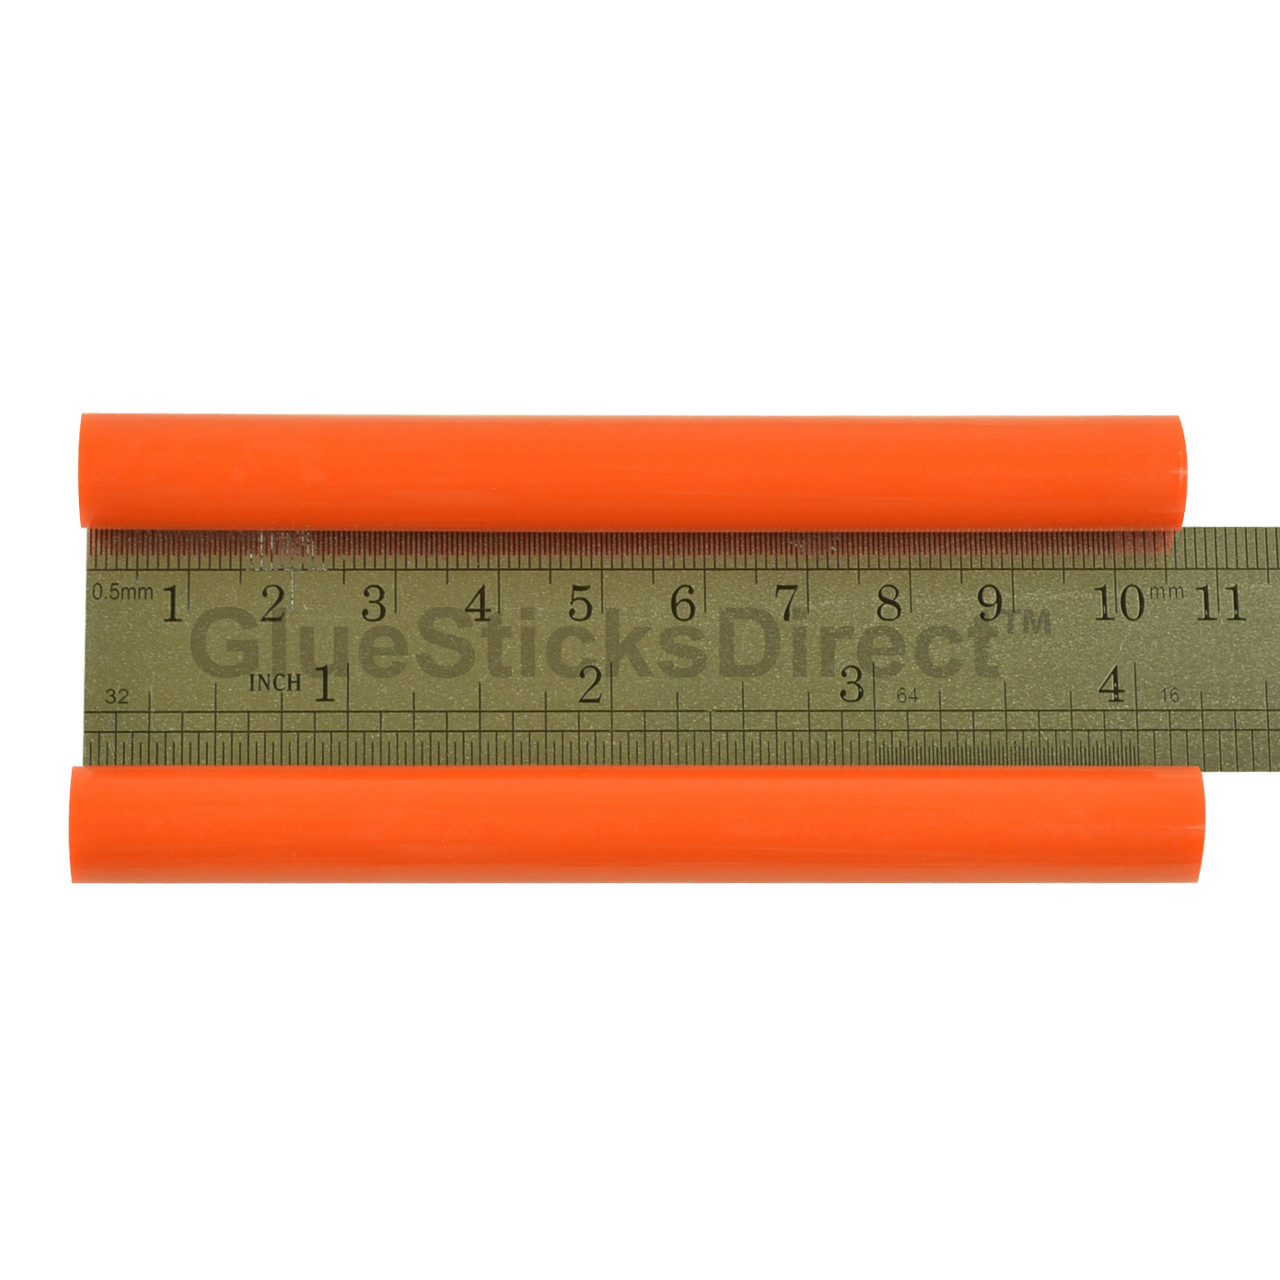 GlueSticksDirect Orange Colored Glue Sticks 7/16" X 4" 5 lbs